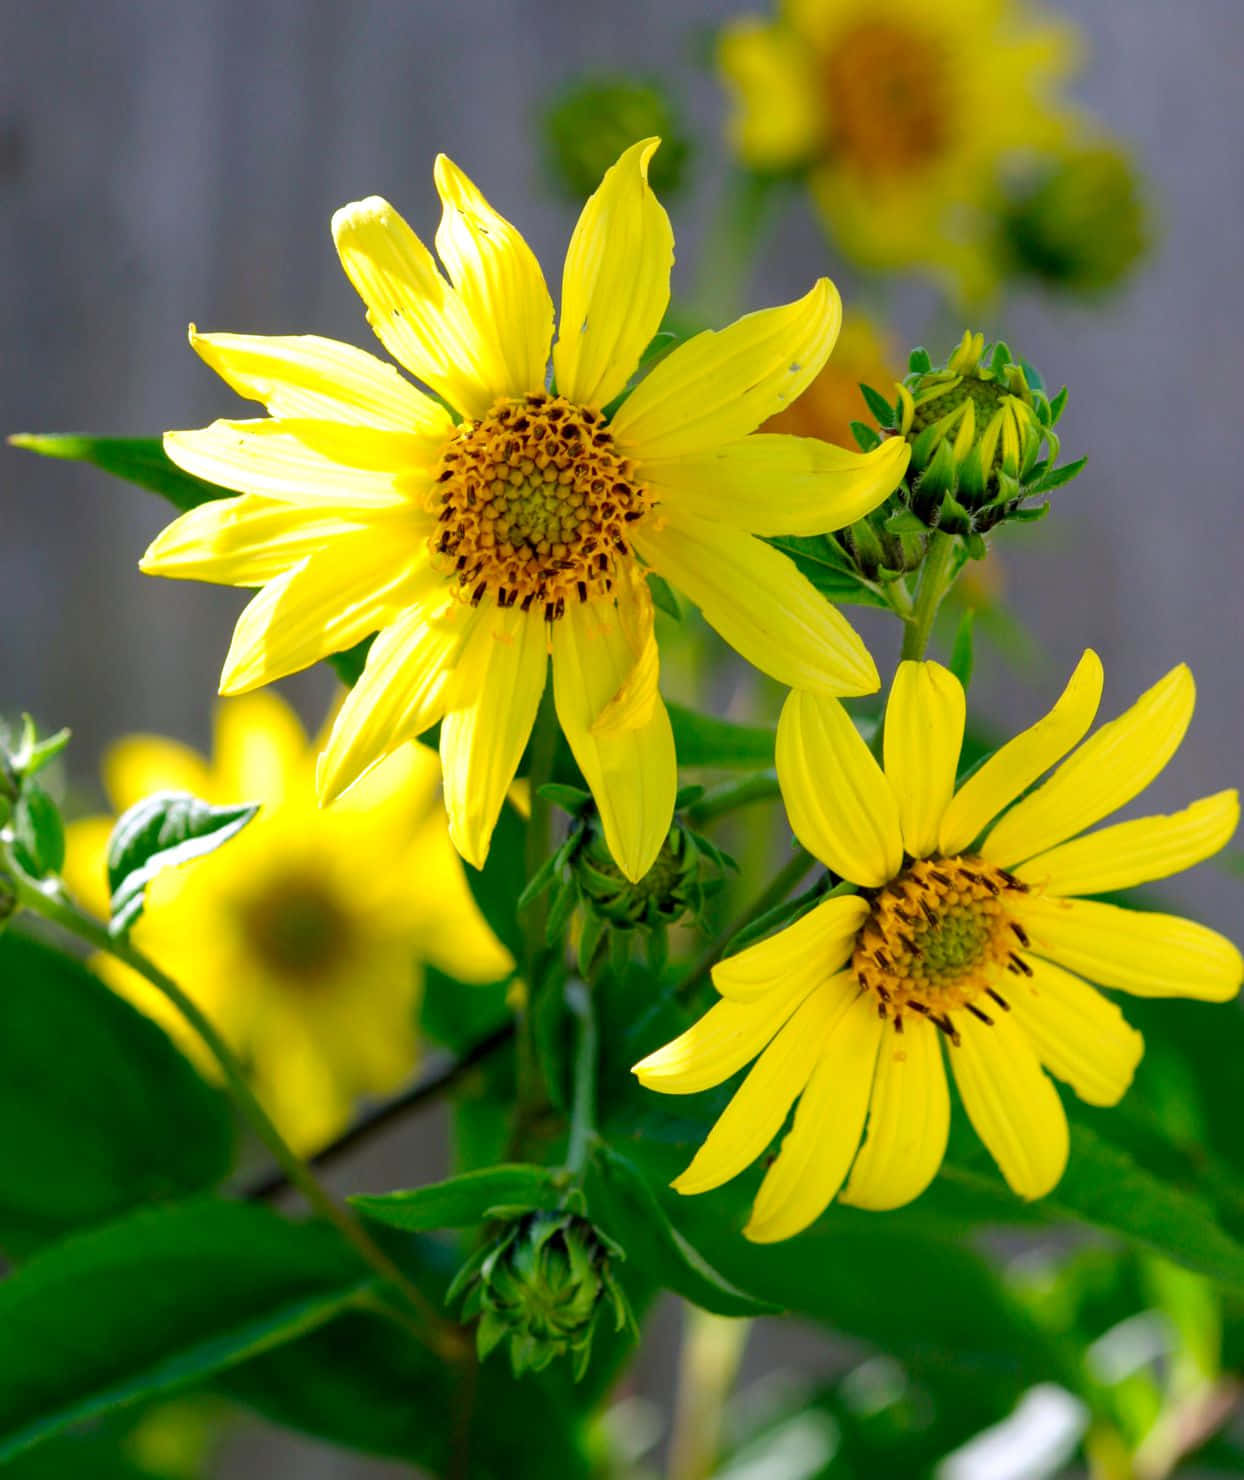 Glowing Yellow Sunflowers Illuminated by the Sun's Rays